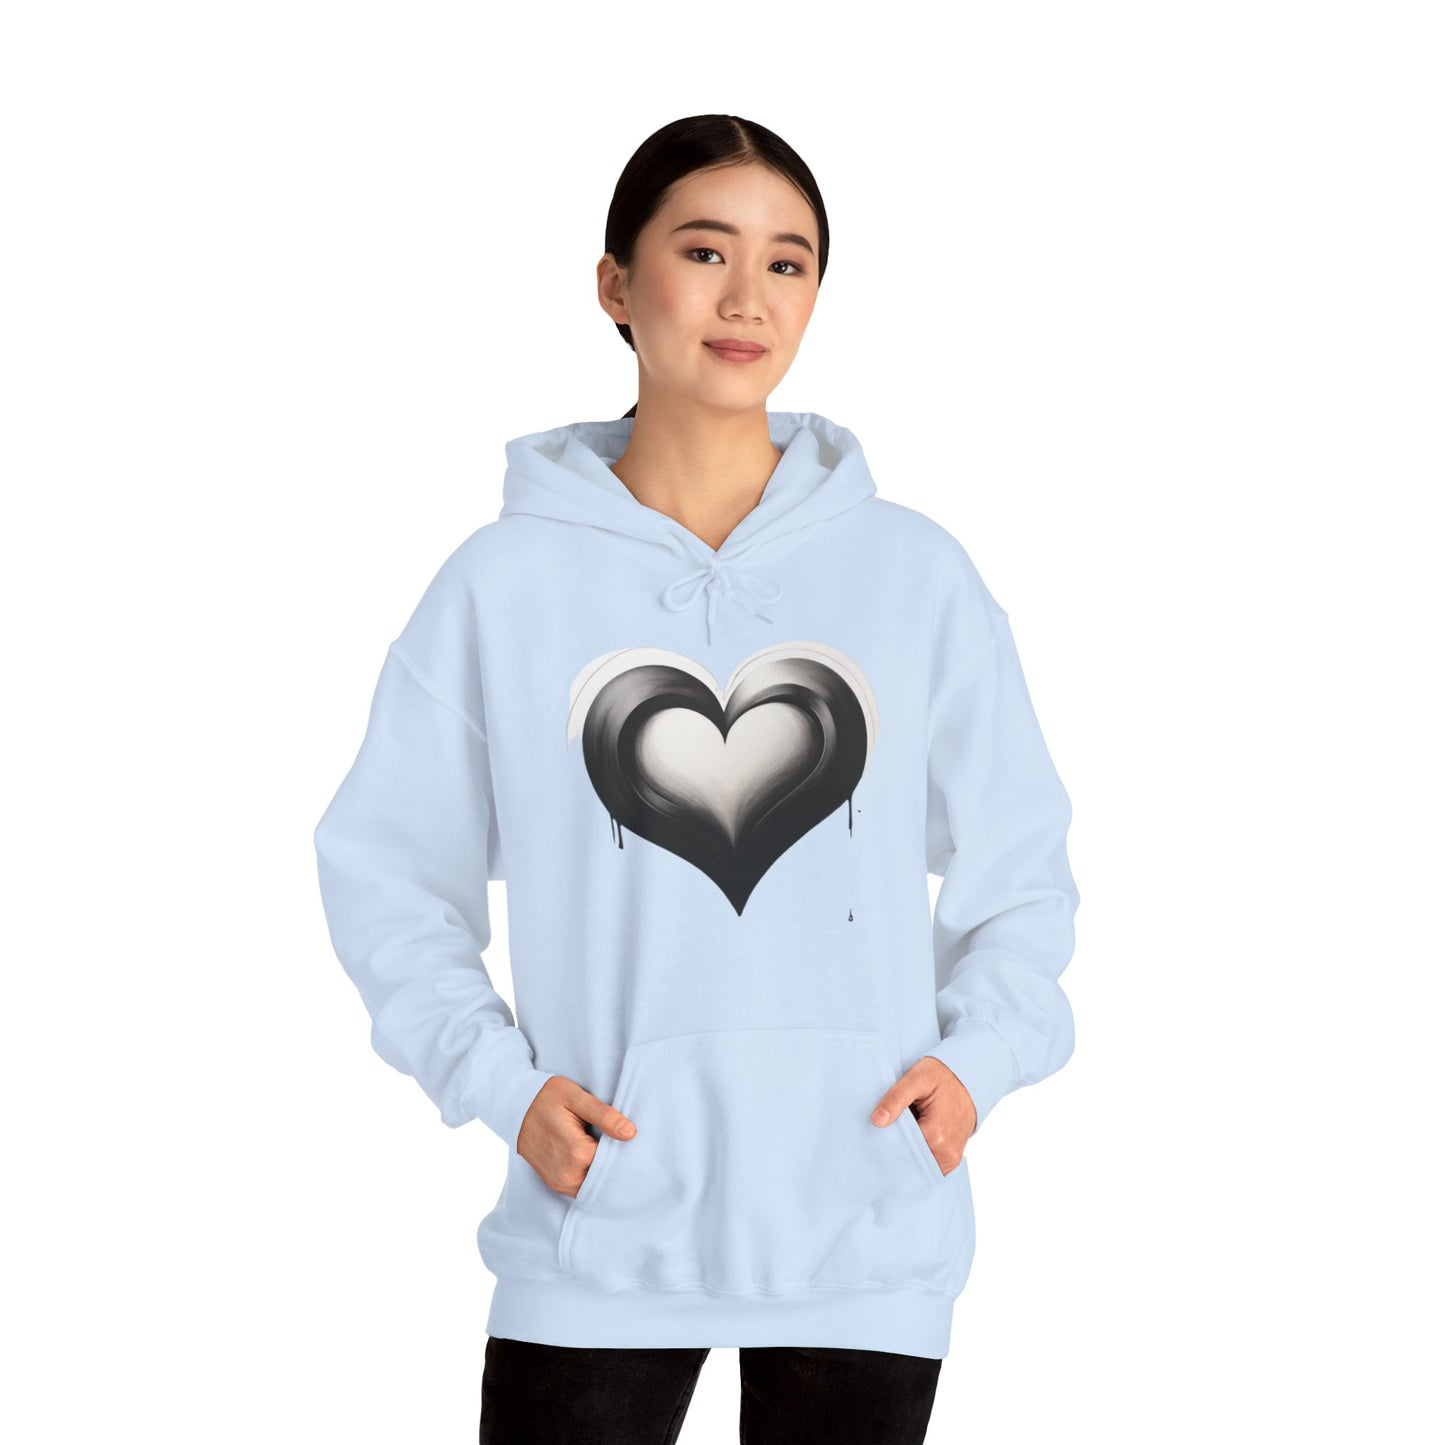 Black and White Heart - Unisex Hooded Sweatshirt